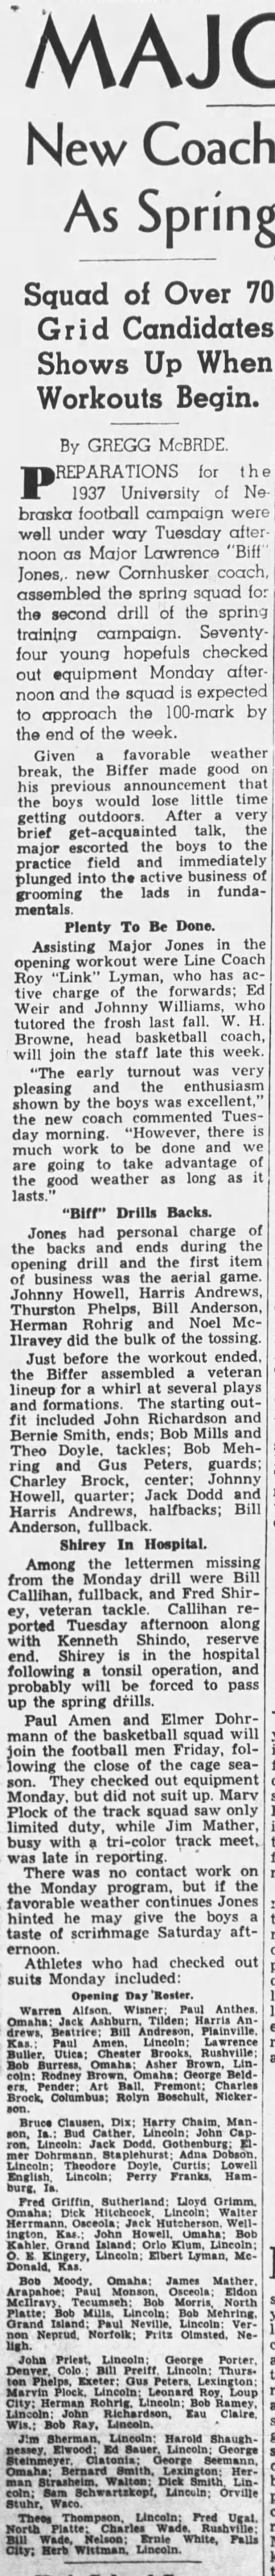 1937 Spring drills under Biff Jones - 